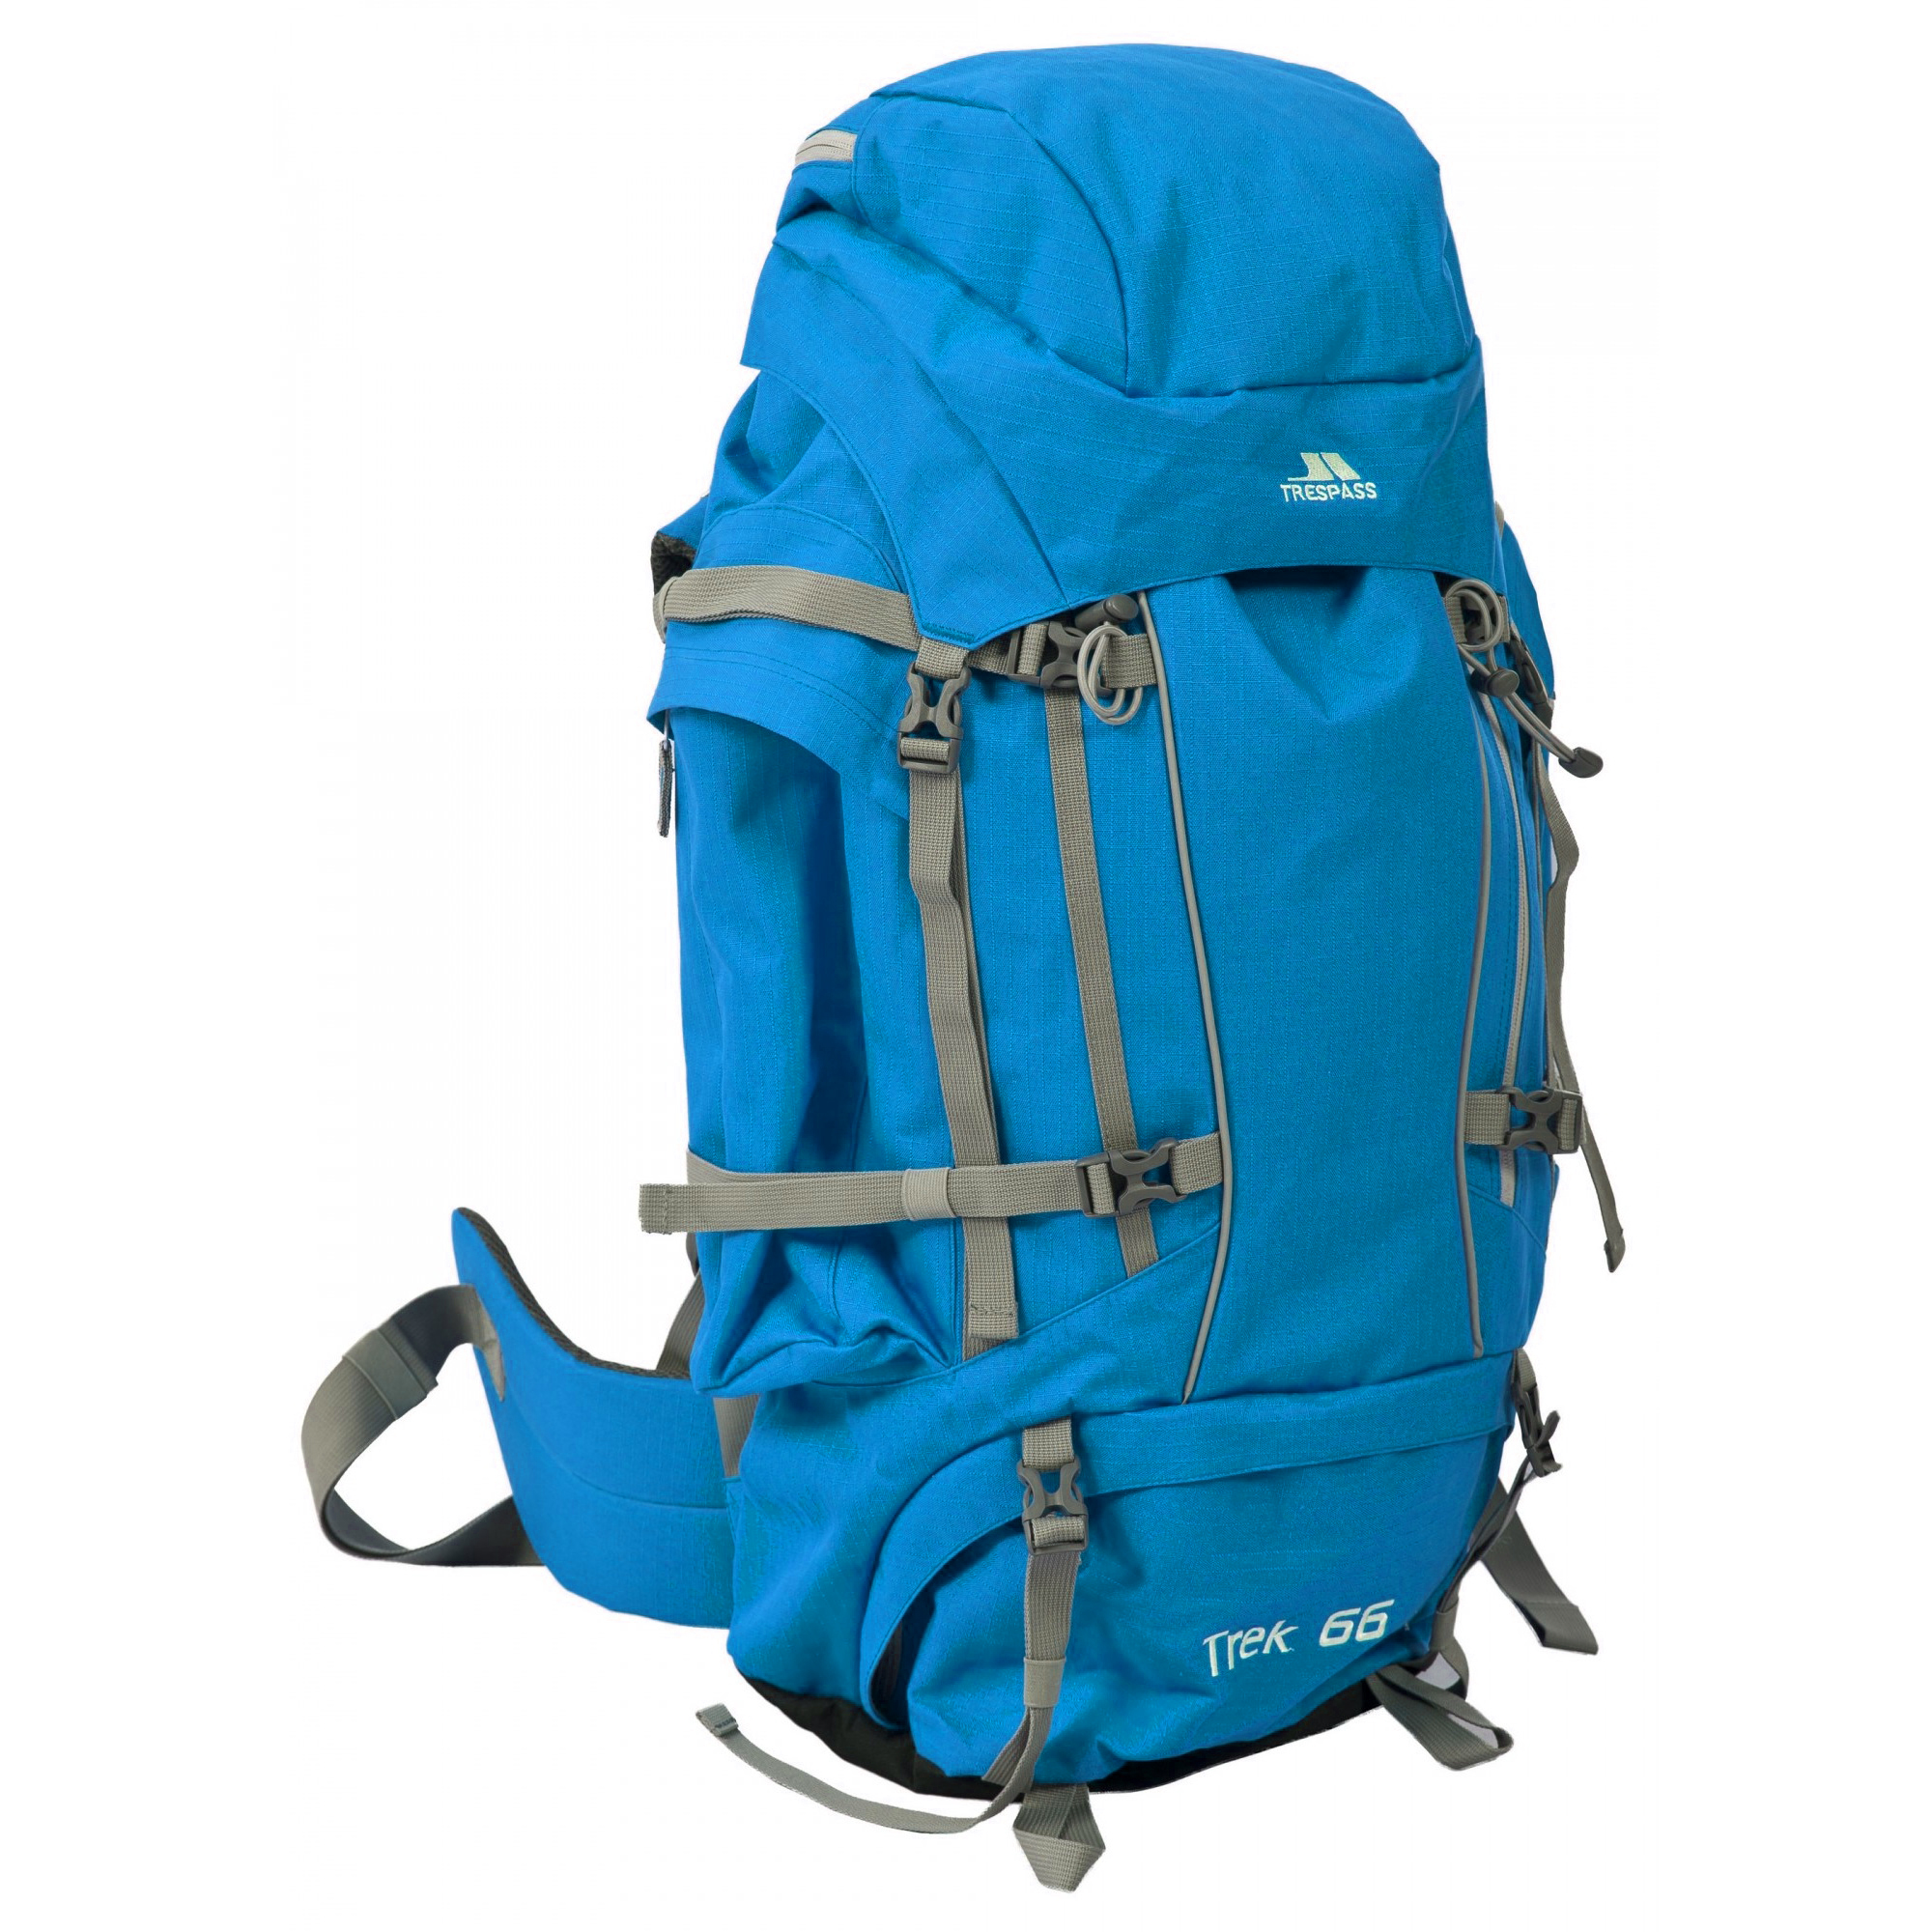 Mochila De Acampada / Hiking Modelo Trek 66 (66 Litros) Acampada / Camping Trespass - azul - 